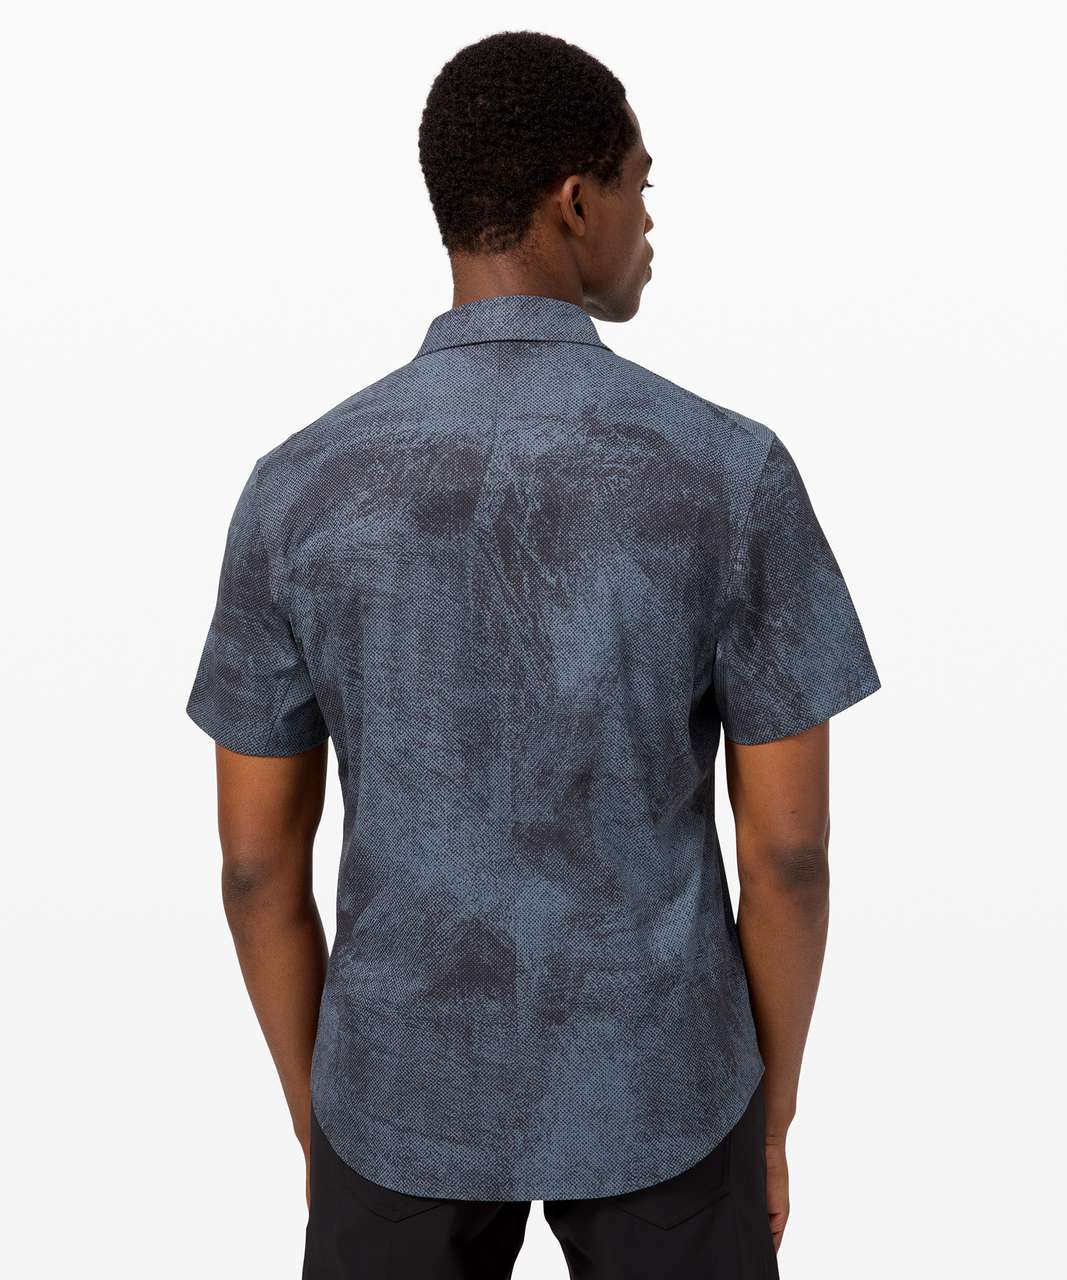 Lululemon Airing Easy Short Sleeve Shirt *Ventlight Mesh - Pixel Print Blue Charcoal Graphite Grey